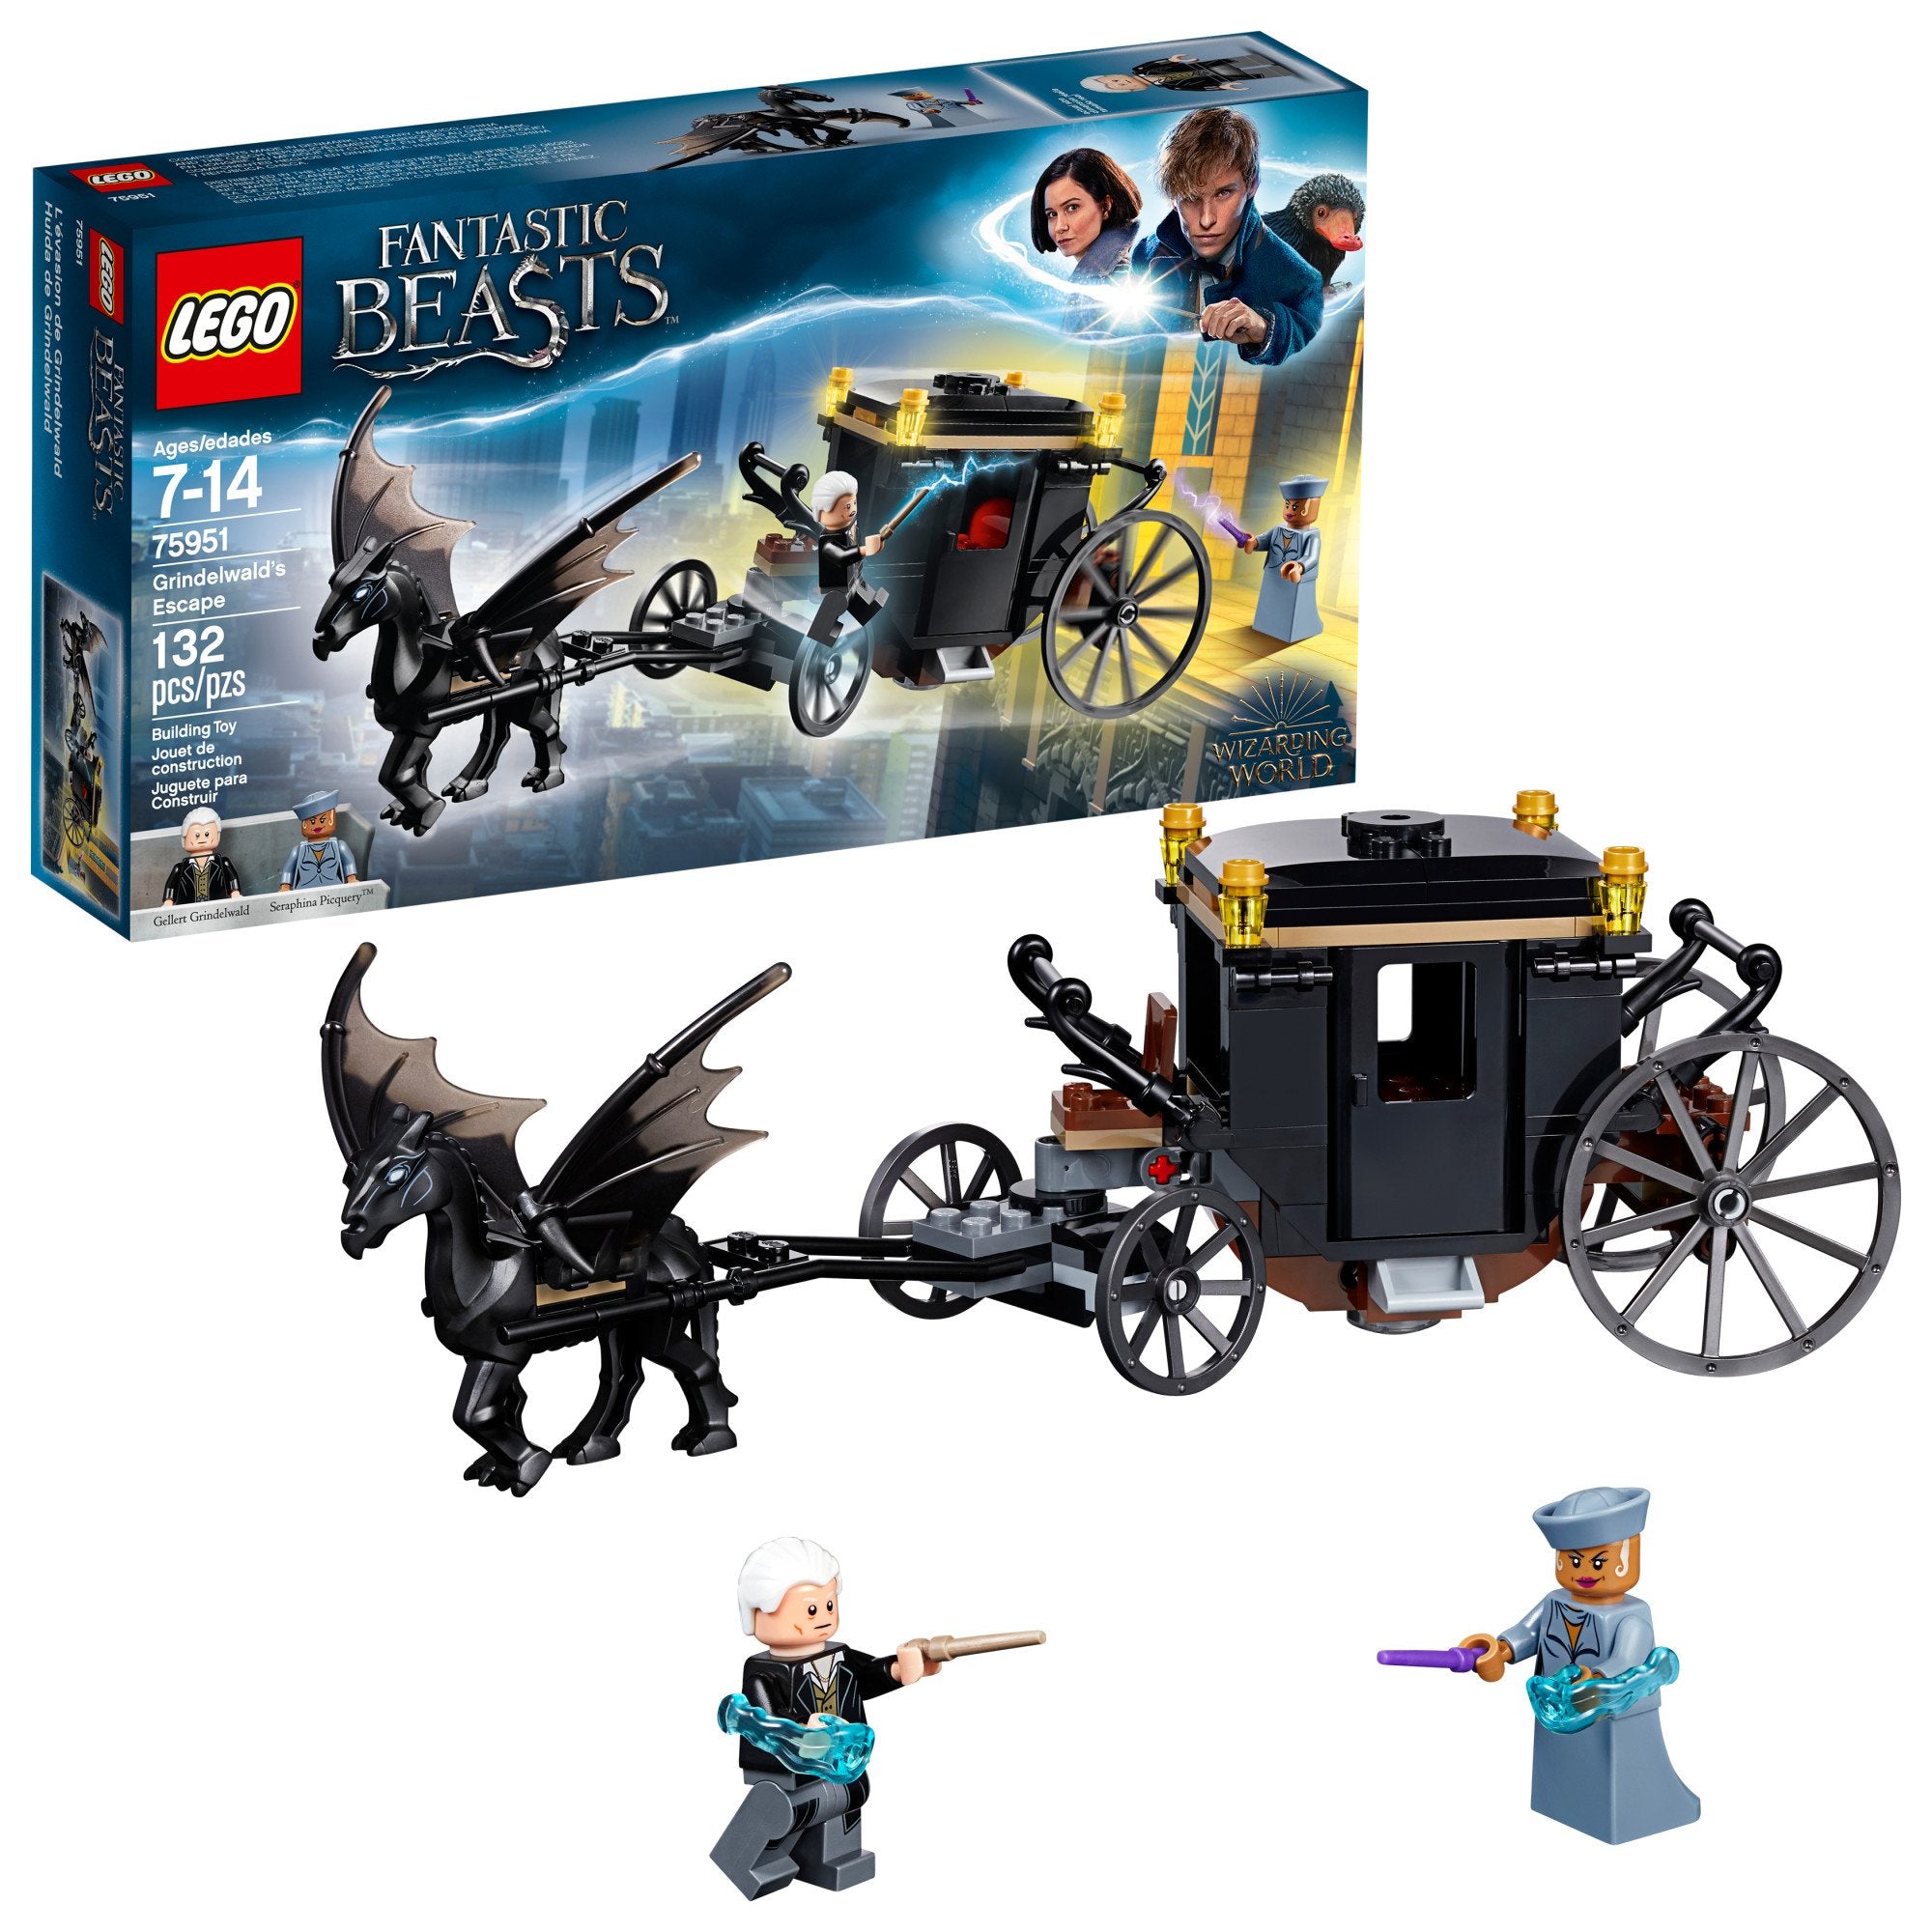 LEGO Harry Potter Grindelwalds Escape 75951 Building Kit (132 Piece), Multicolor (Like New, Open Box)